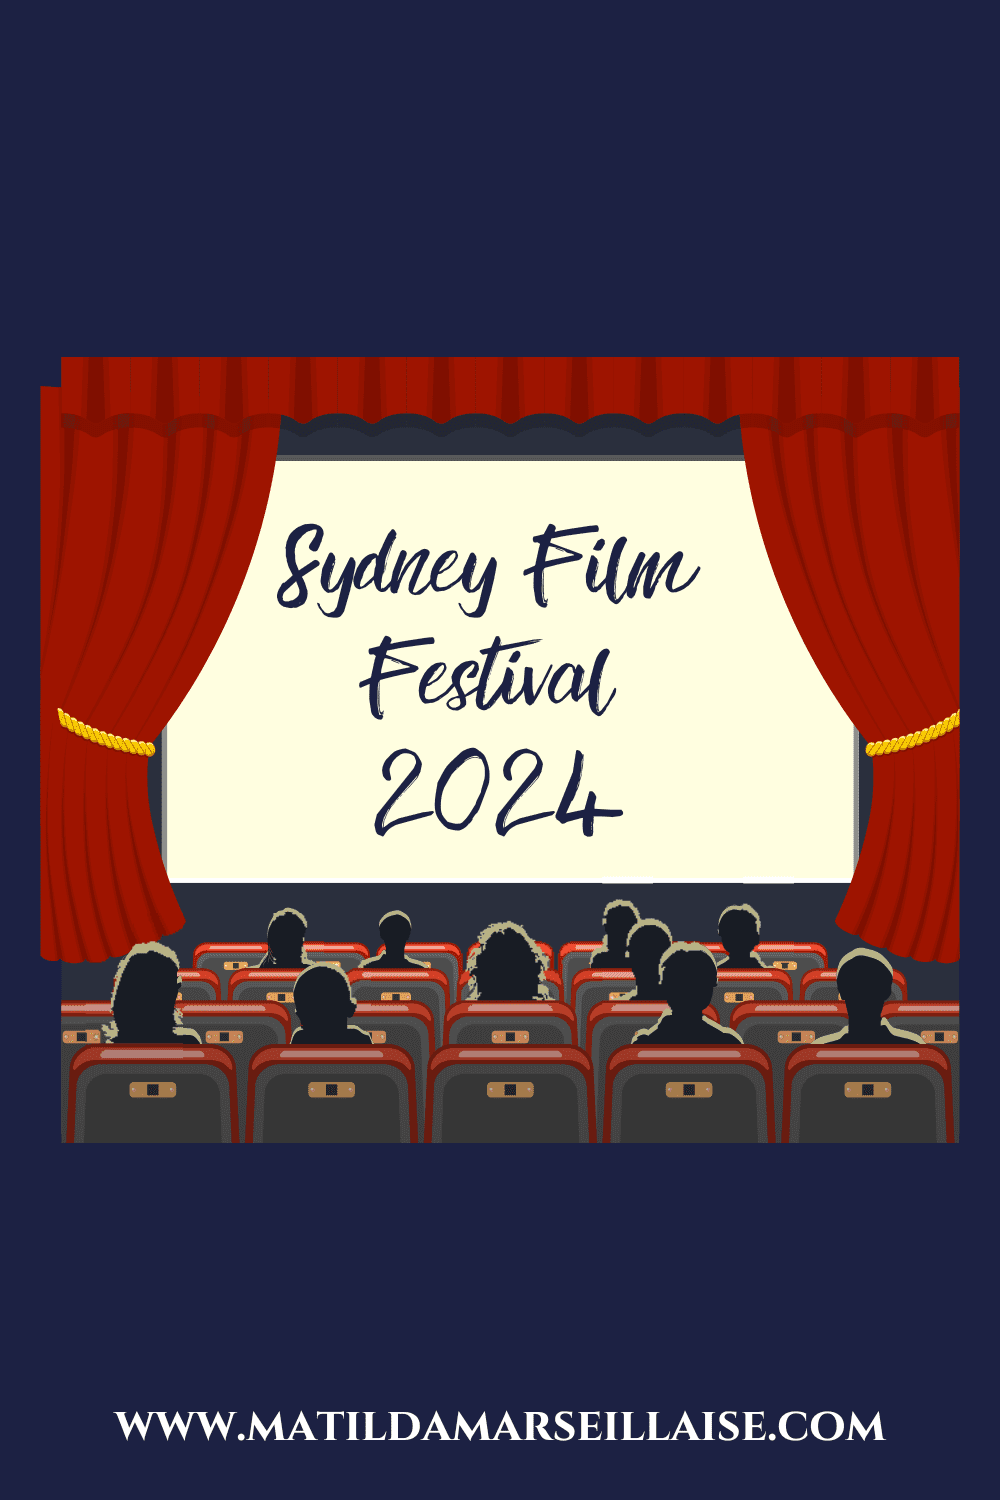 34 films to see at Sydney Film Festival 2024